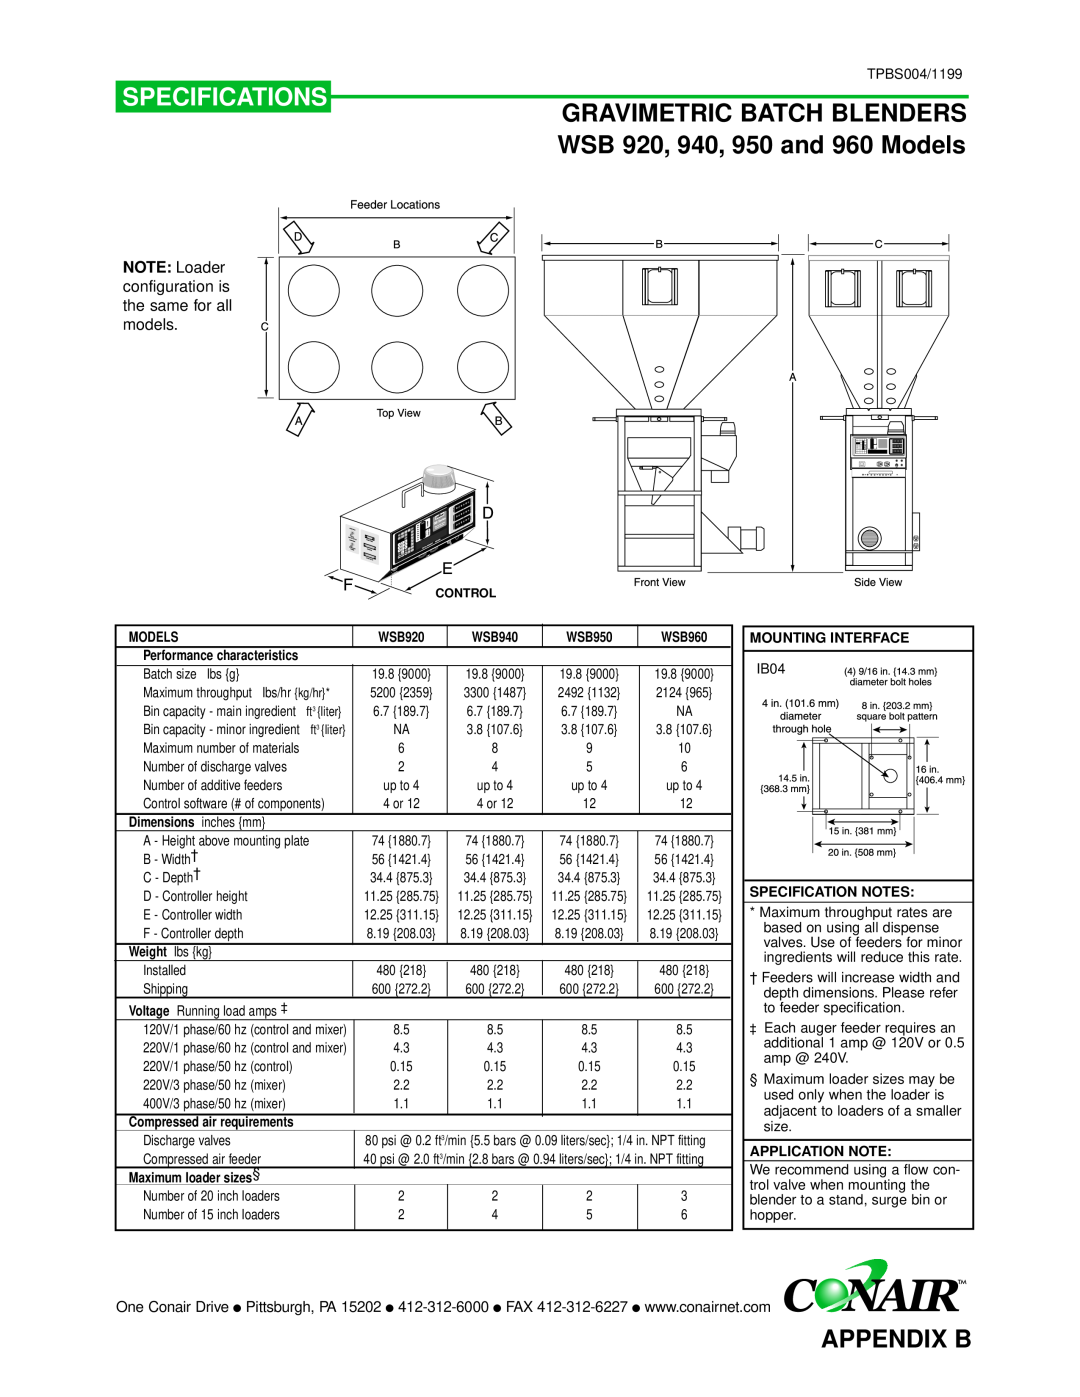 Conair GB/ WSB manual Gravimetric Batch Blenders, WSB 920, 940, 950 and 960 Models, Specifications, Appendix B 